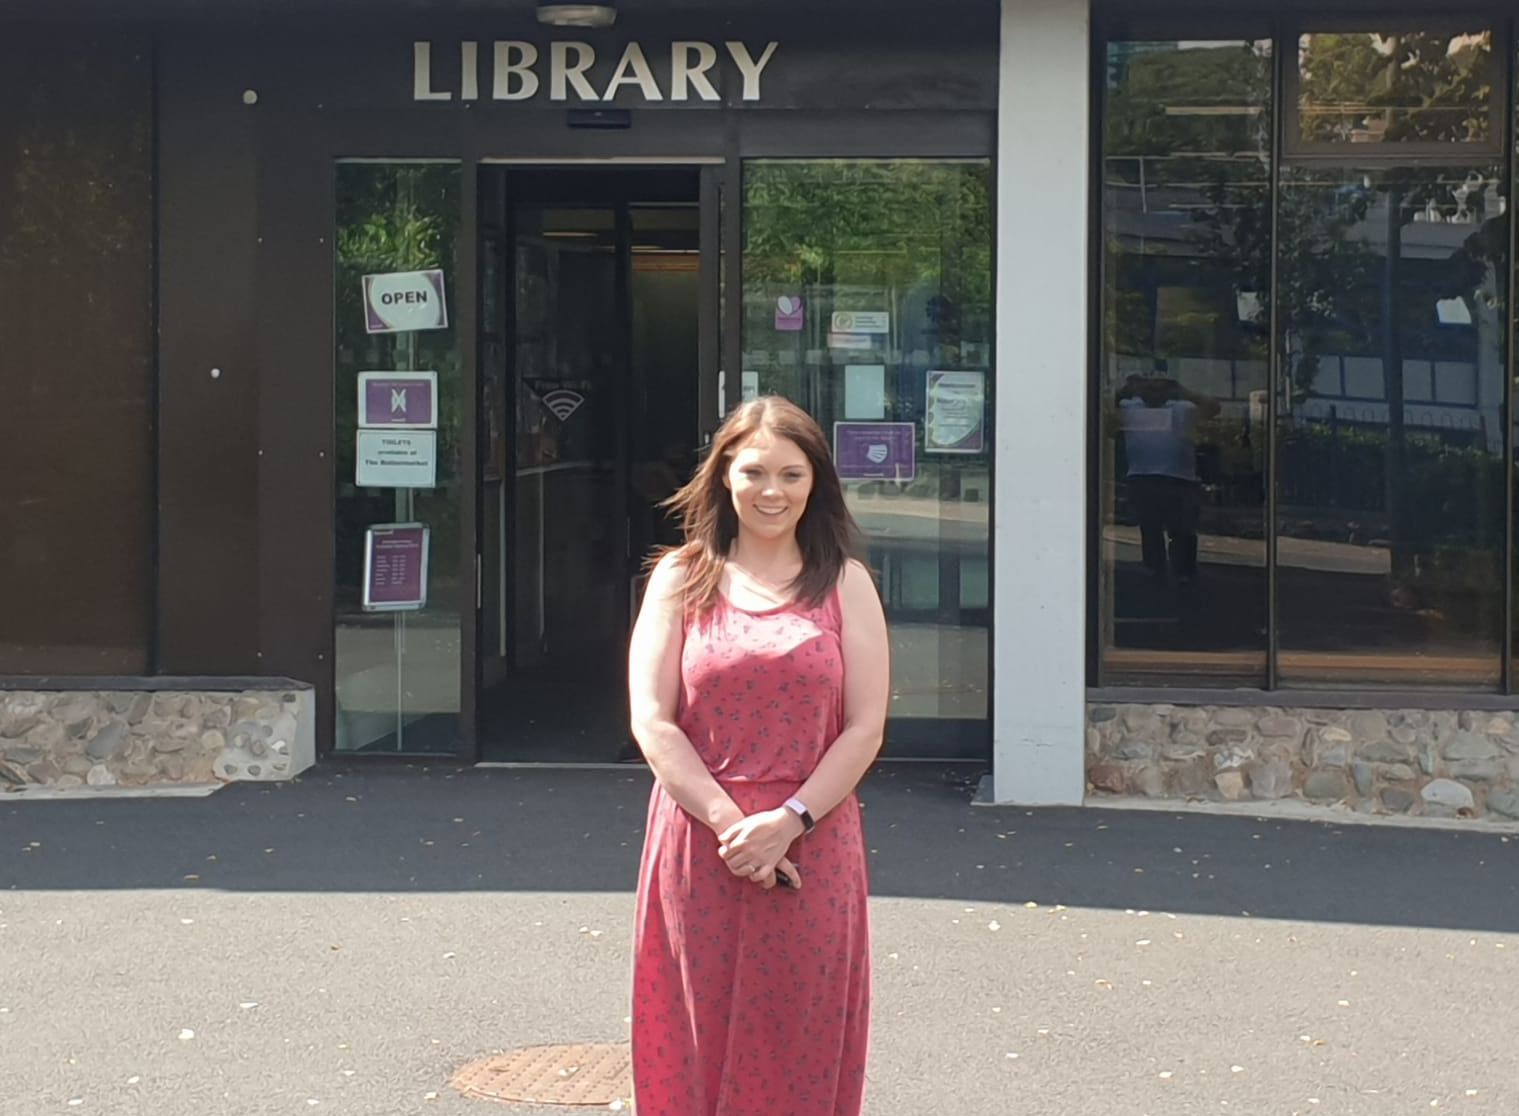 Enniskillen library: Planning application lodged for renovation